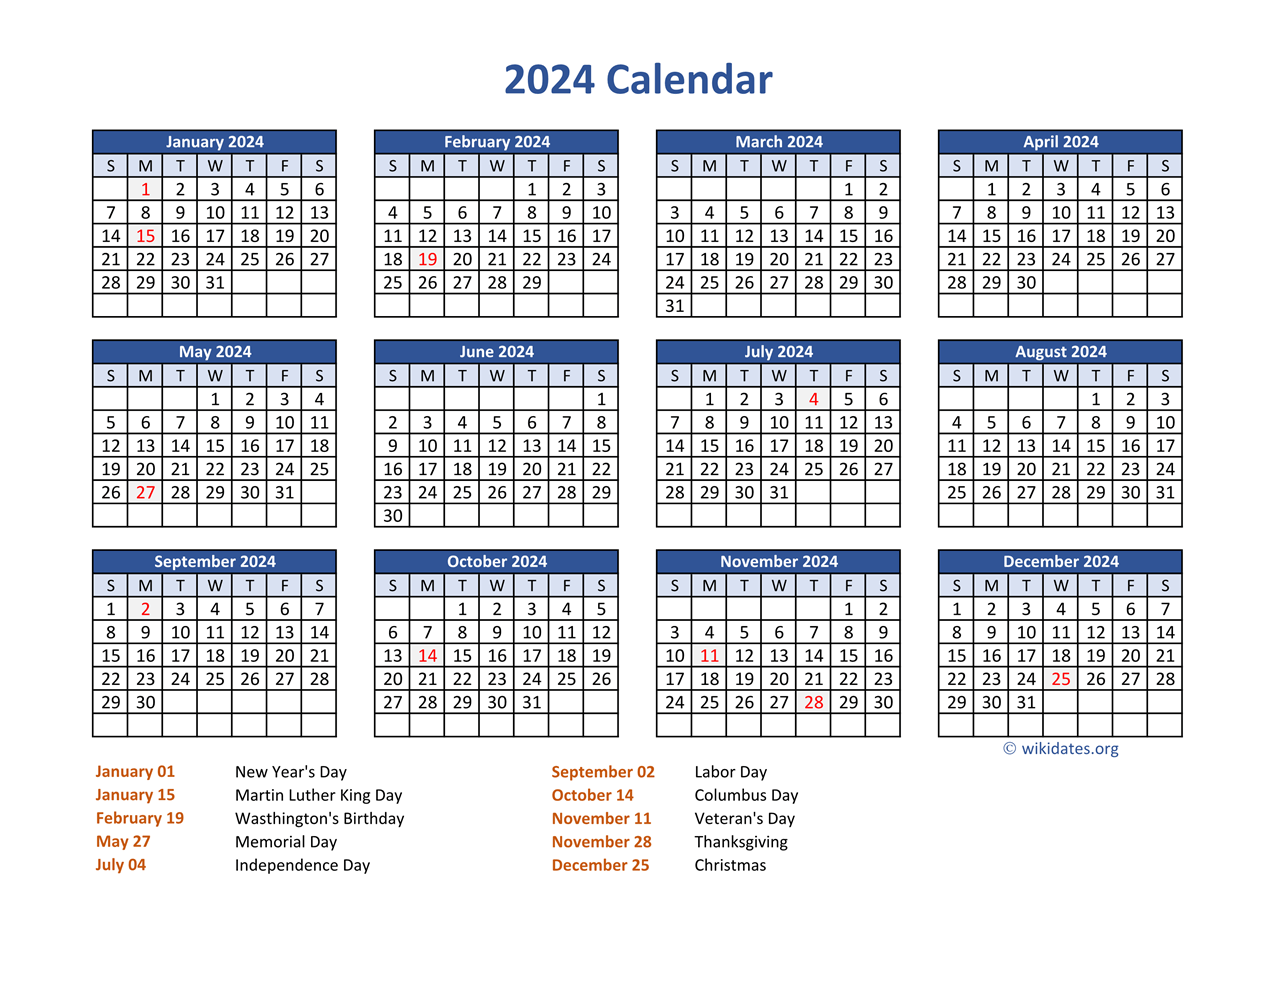 Pdf Calendar 2024 With Federal Holidays | Wikidates for Holiday Calendar 2024 Printable